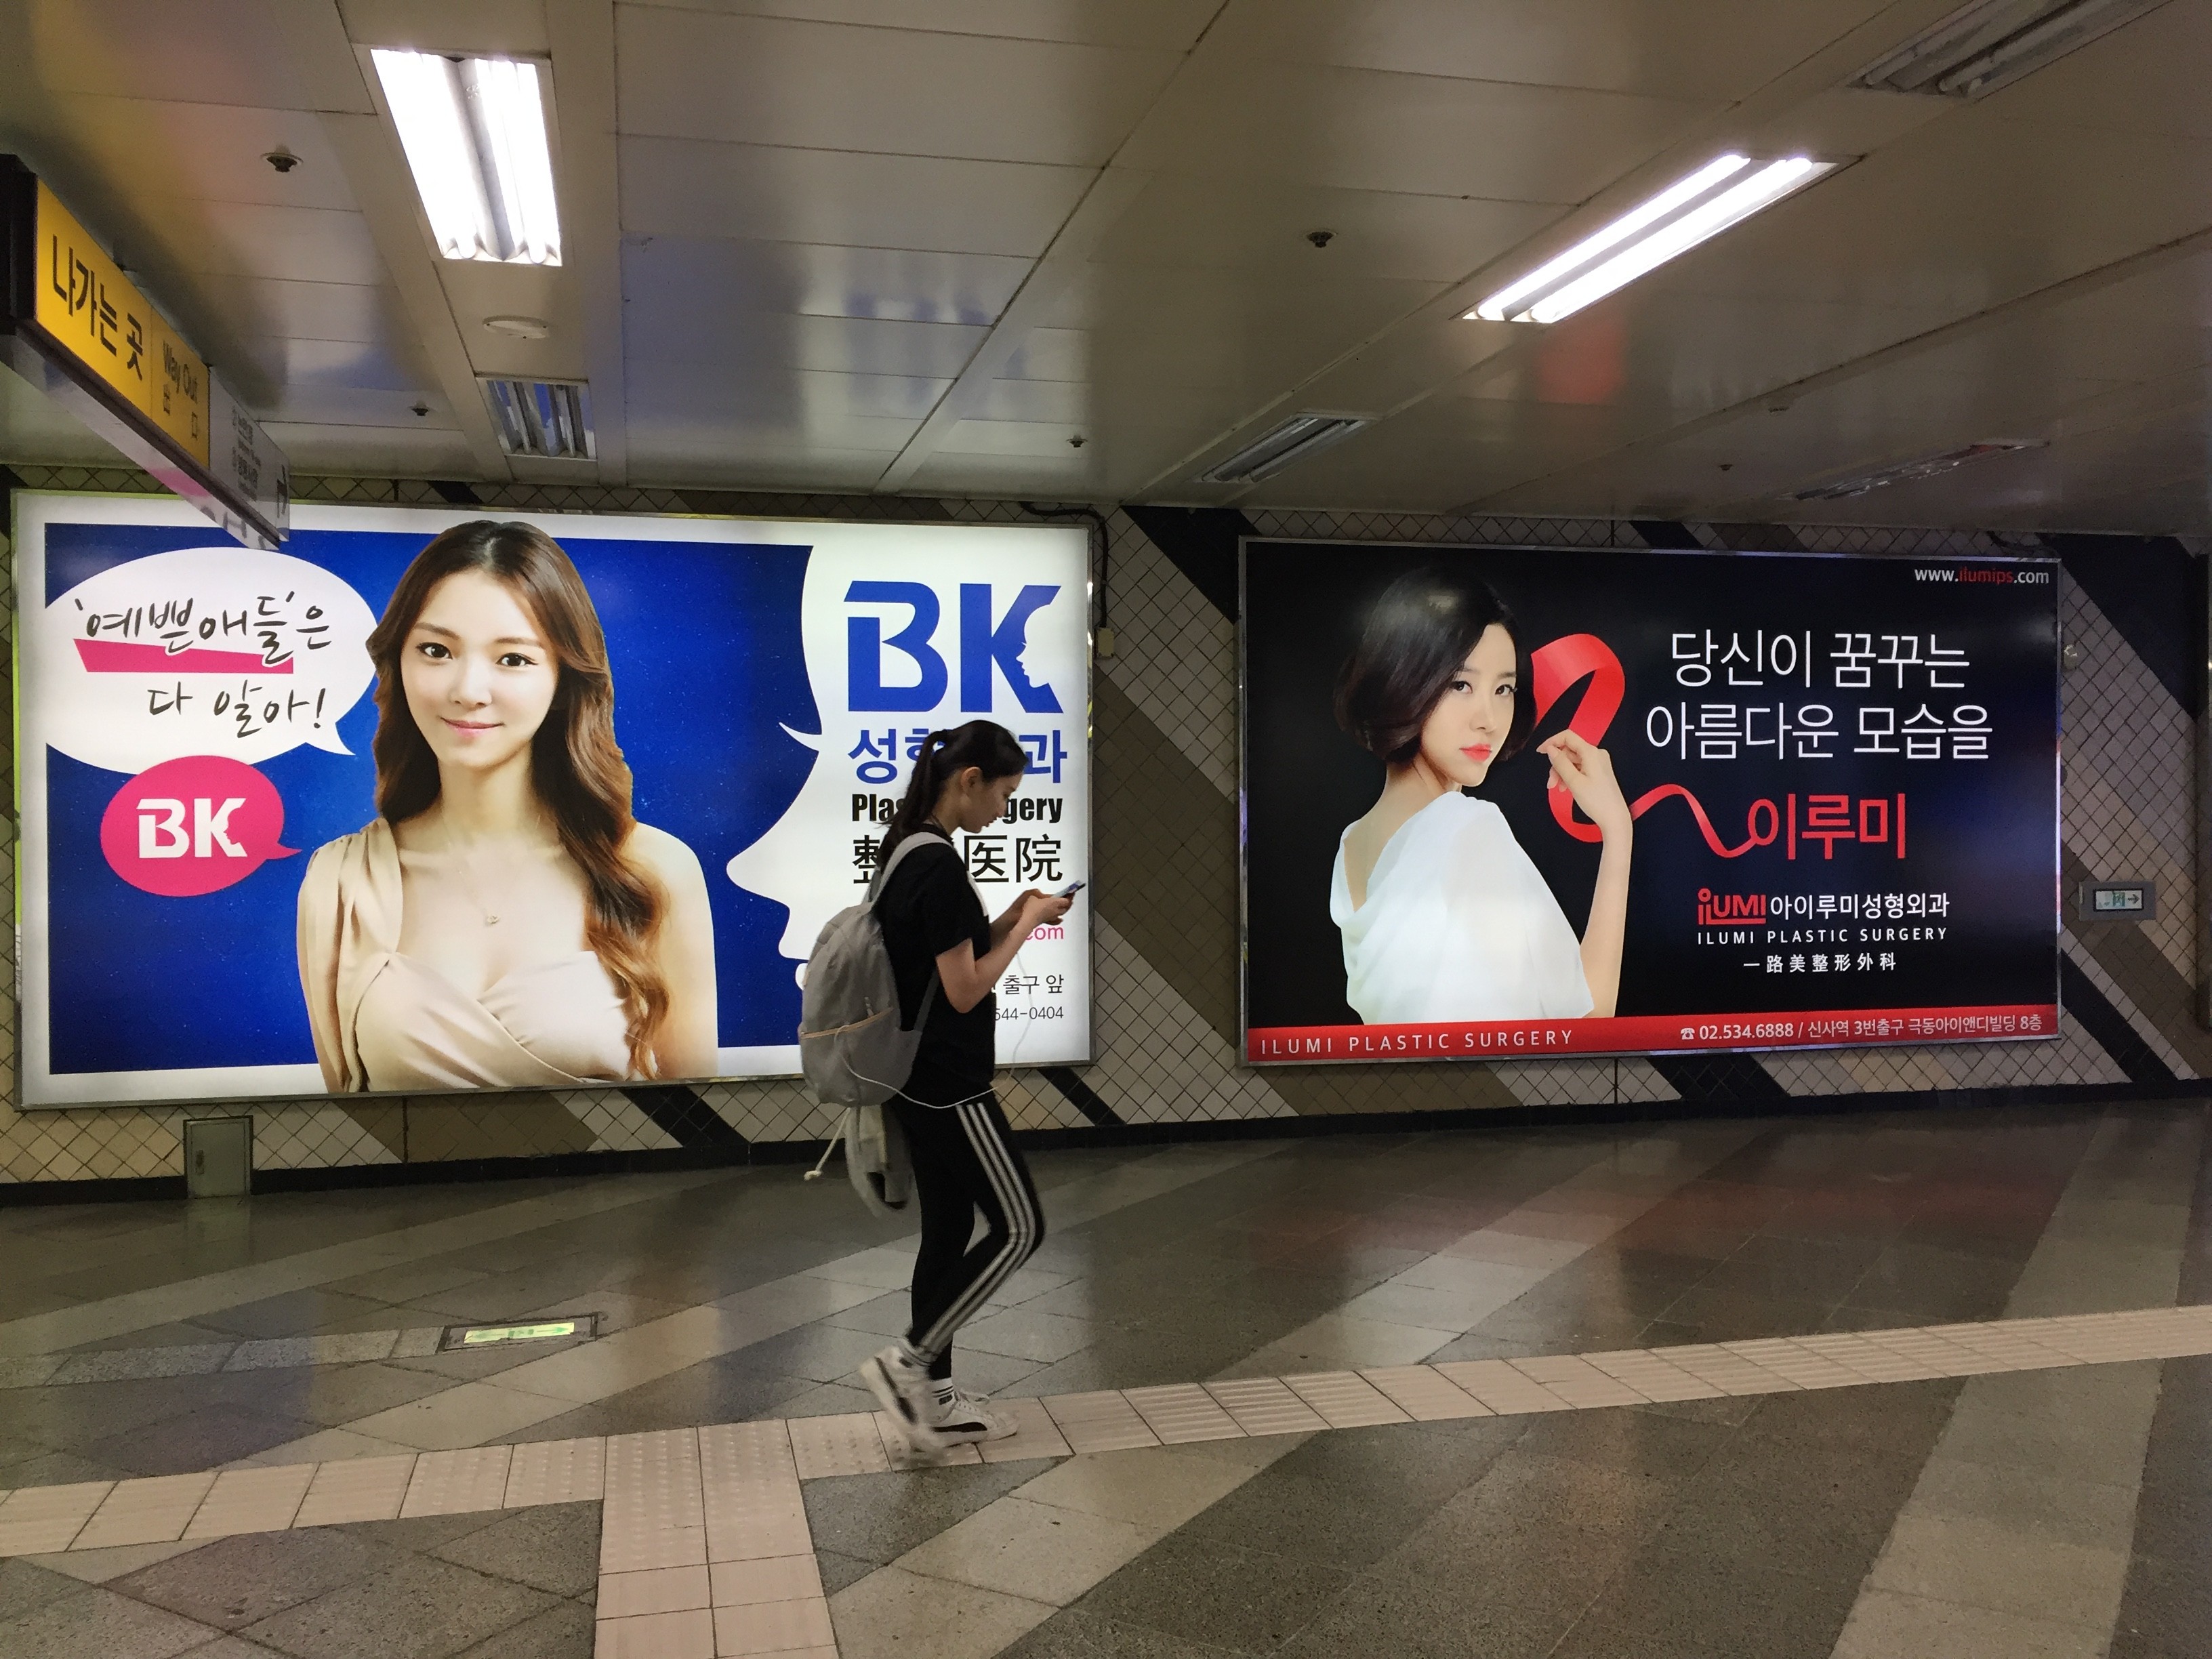 No face porn in Seoul